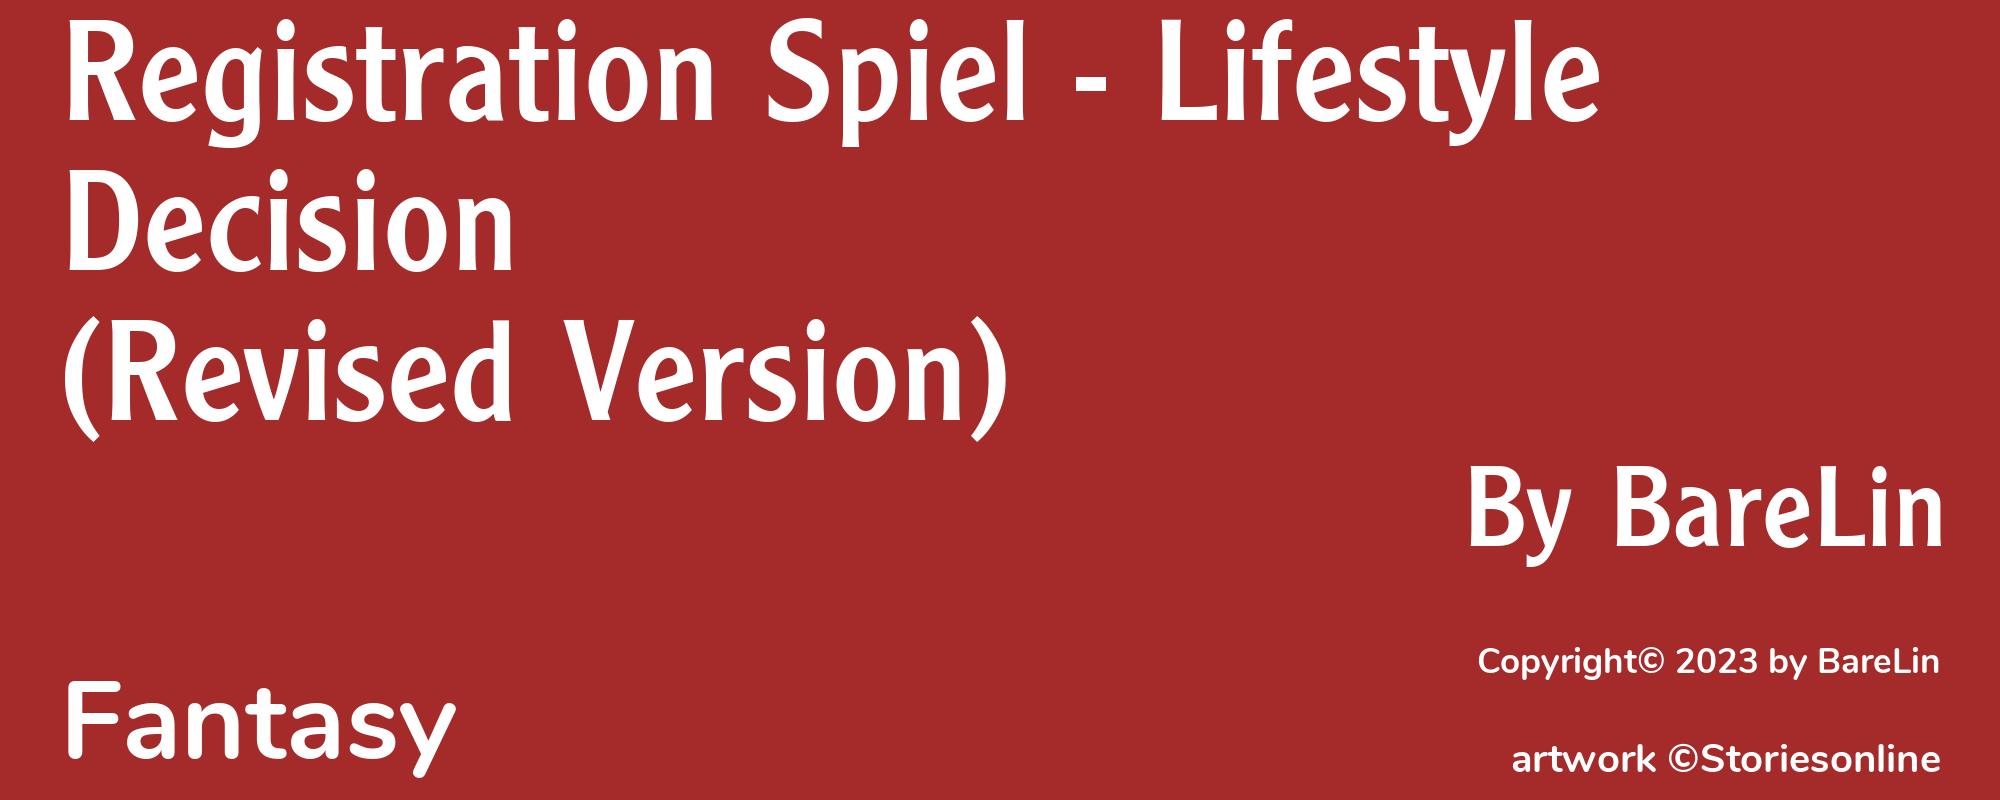 Registration Spiel - Lifestyle Decision (Revised Version) - Cover